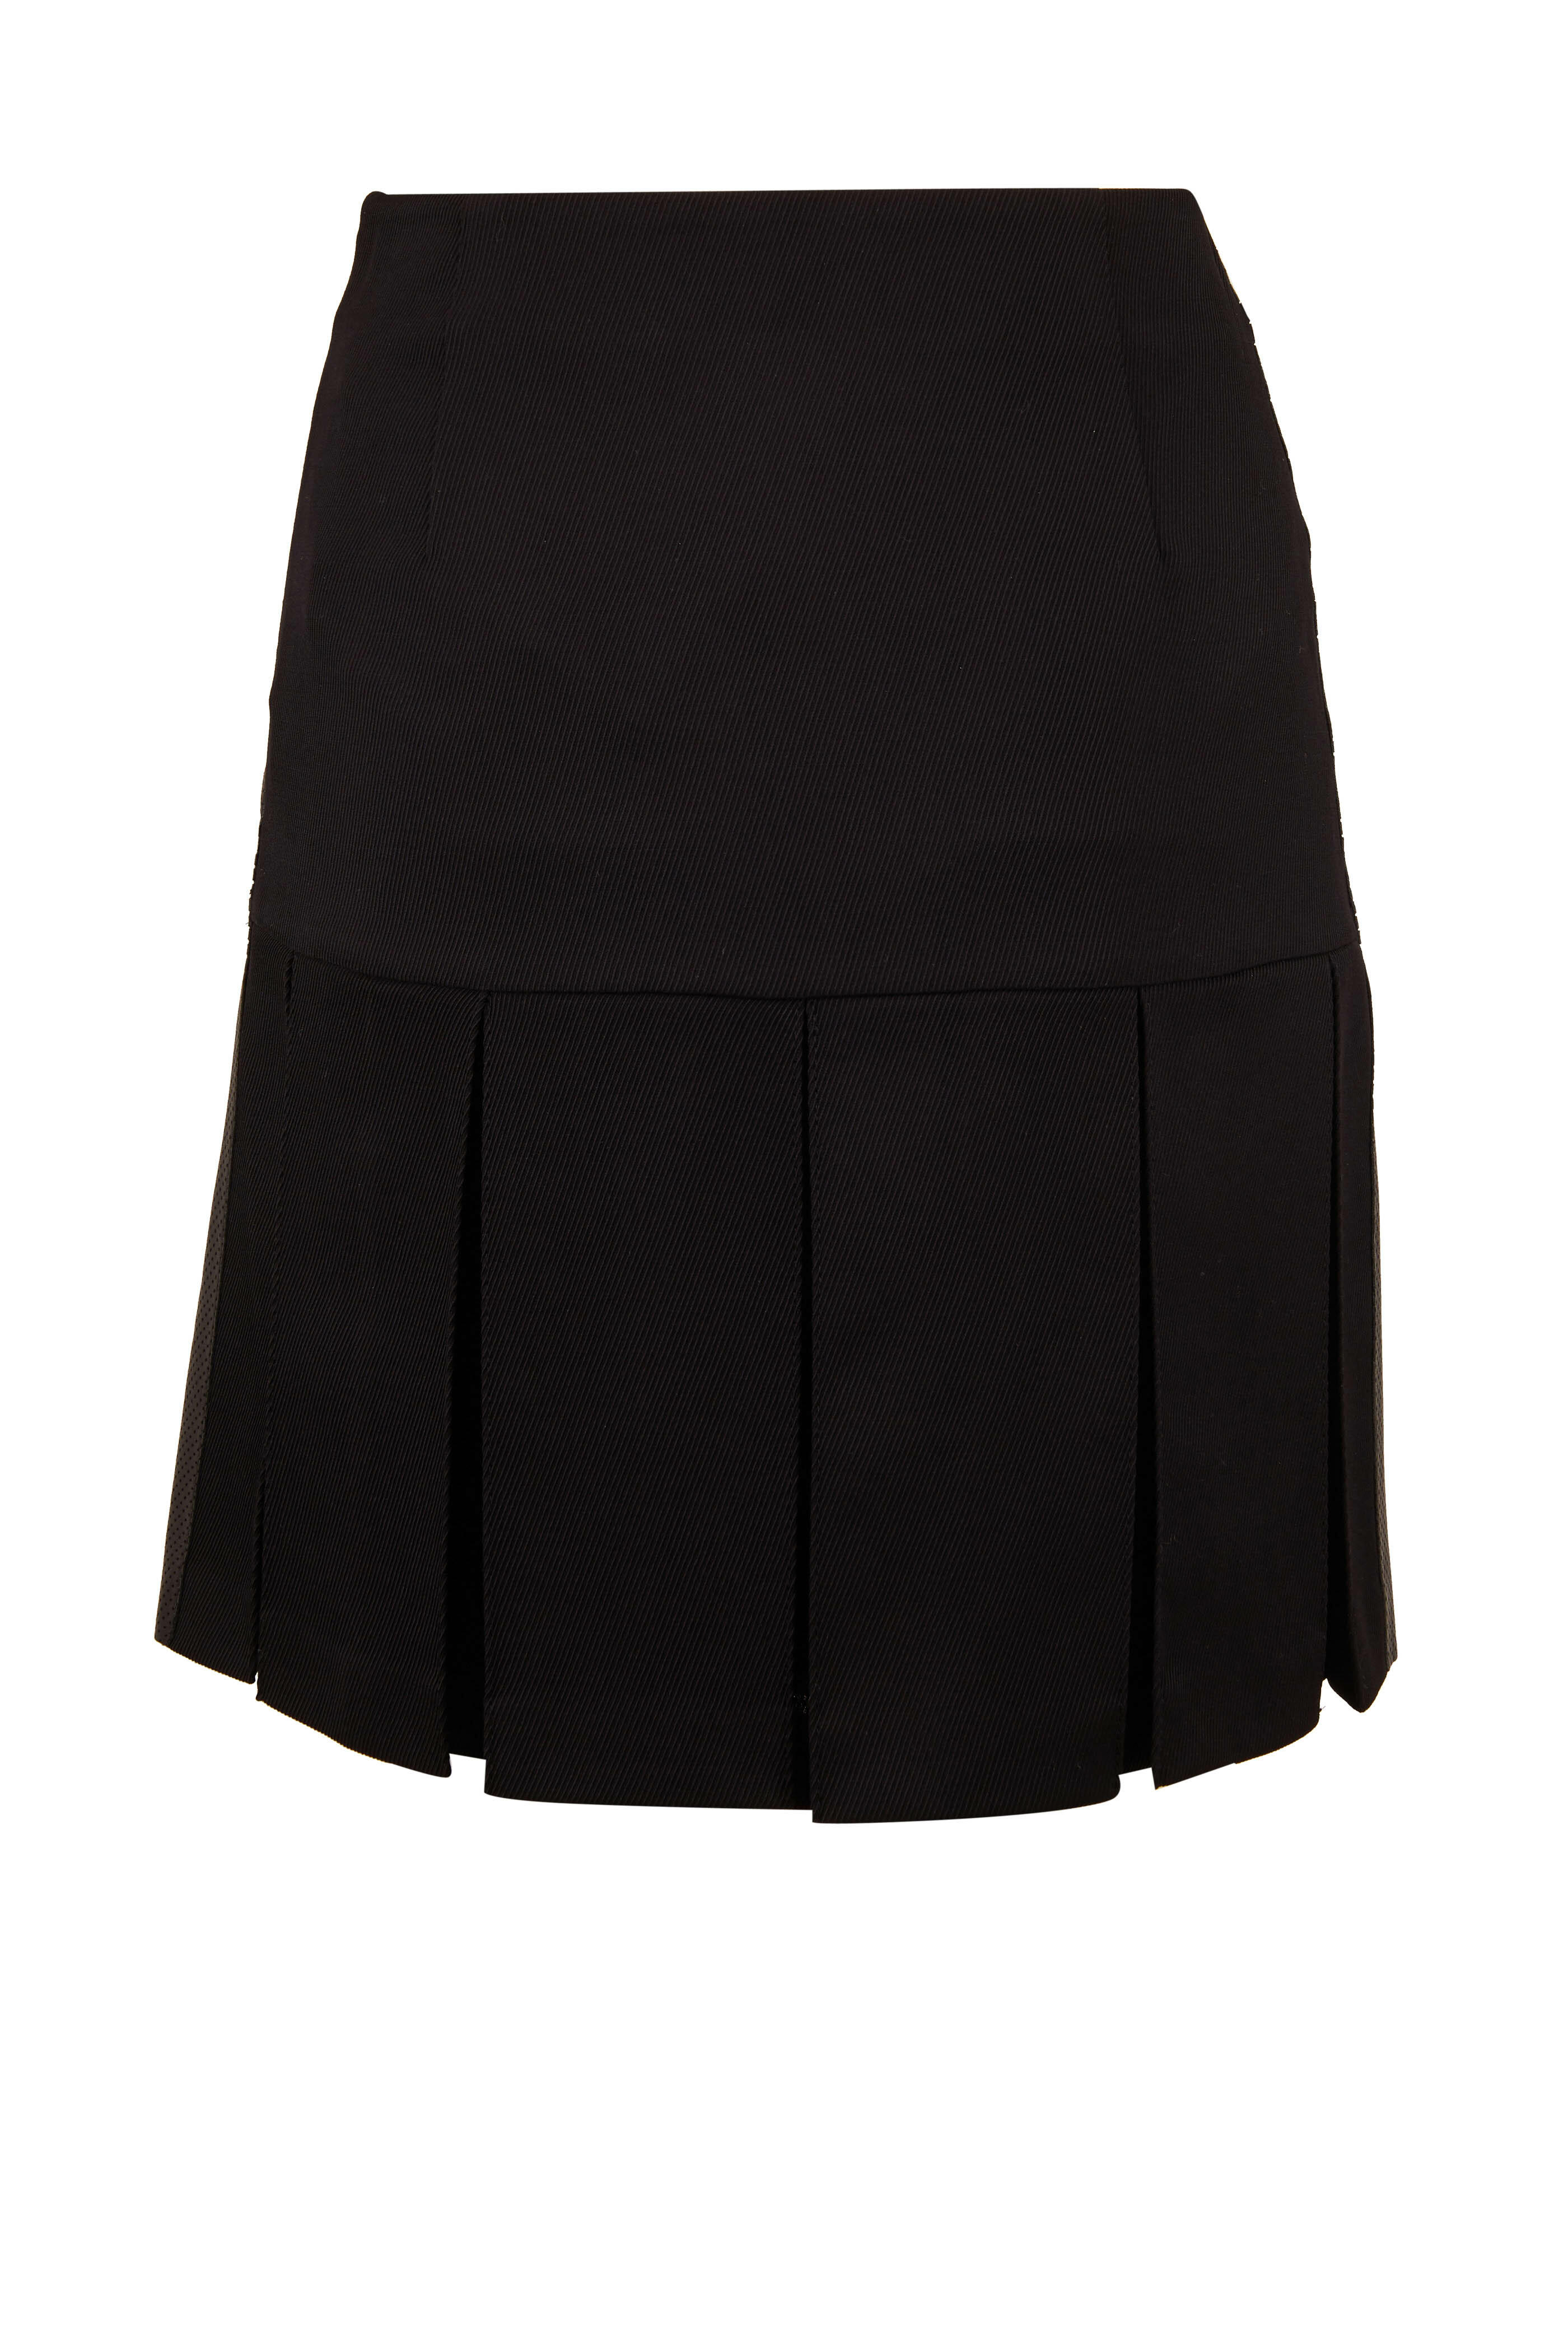 Akris Punto - Black Perforated Leather Front Mini Skirt